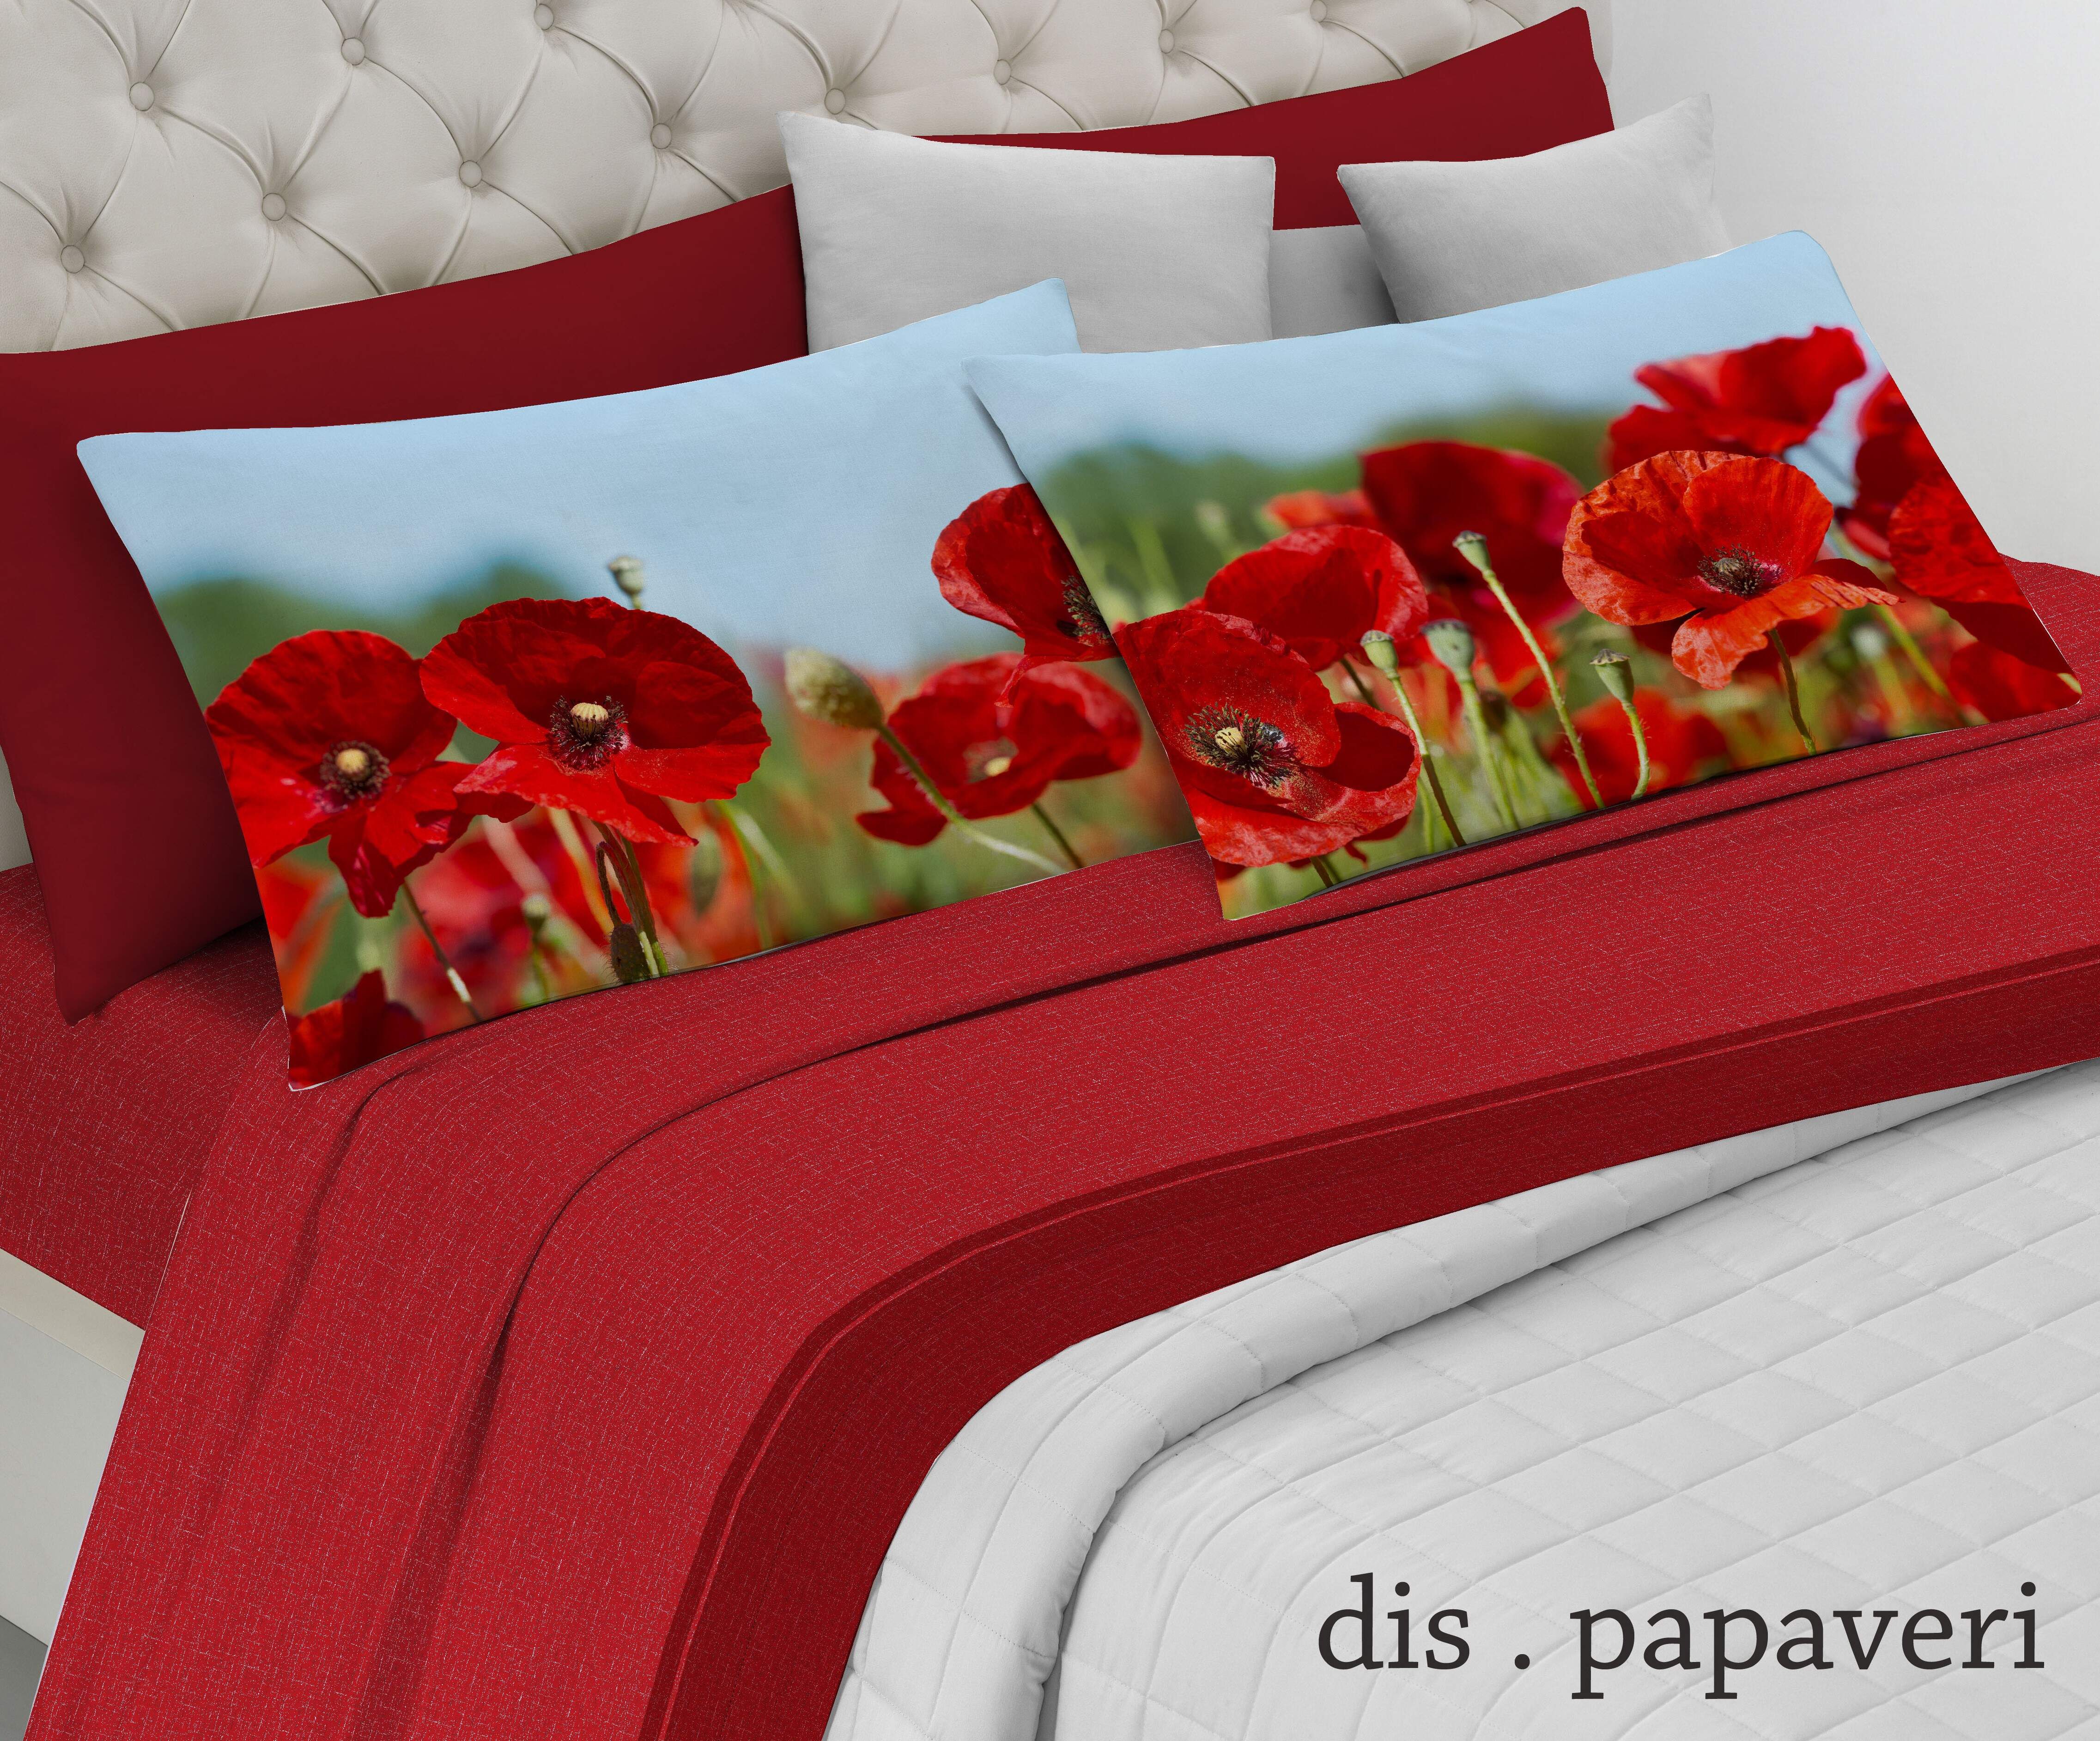 Completo letto lenzuola matrimoniale Papaveri rosso Spin off